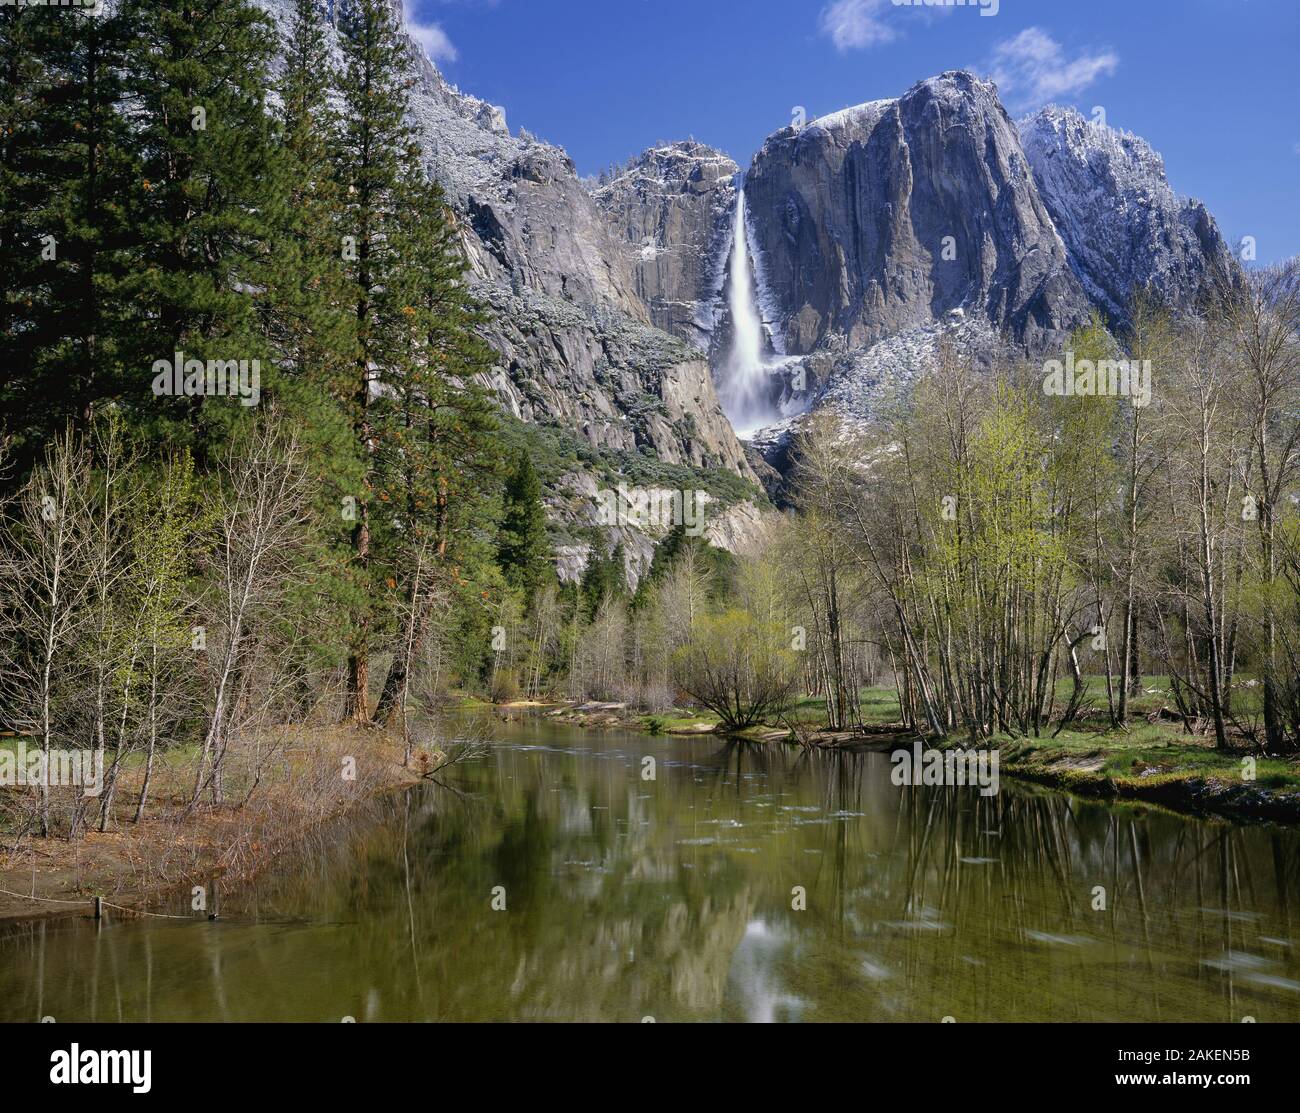 The Merced River and Upper Yosemite Falls in Yosemite National Park, California, USA. Stock Photo